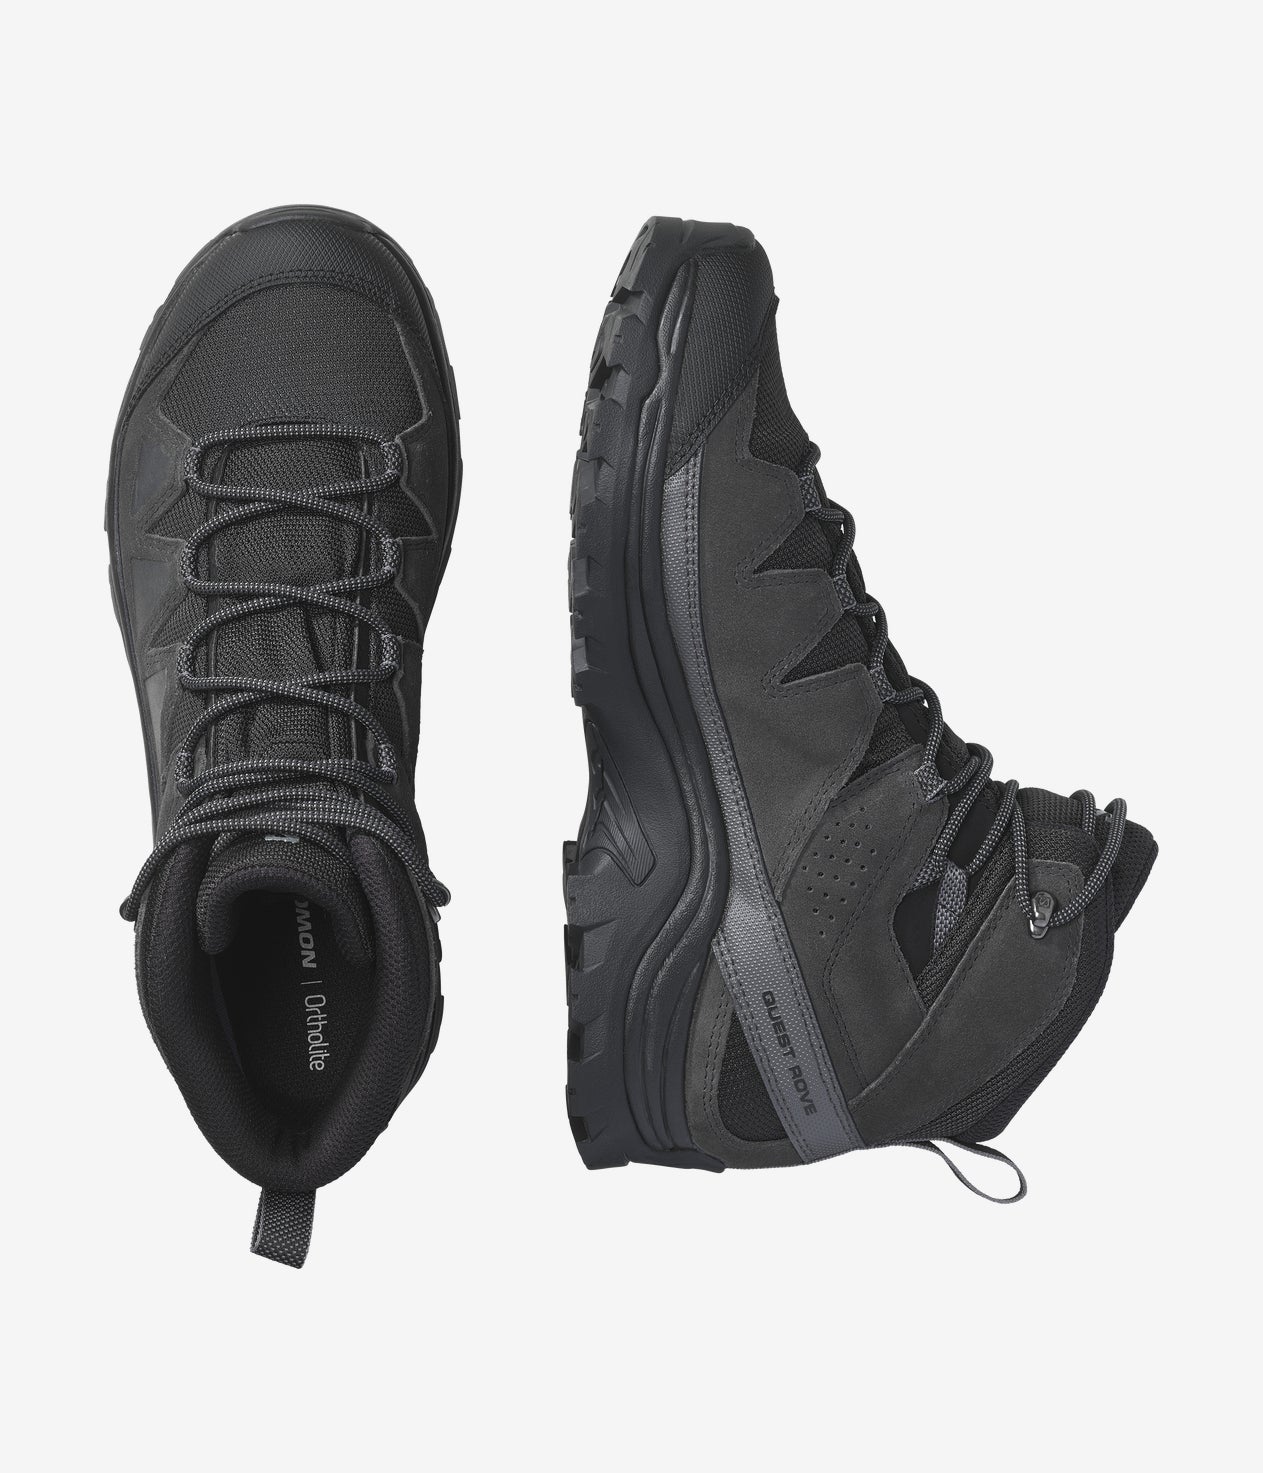 Salomon Quest Rove Gore-TEX Men's Trail Running Shoe, Black